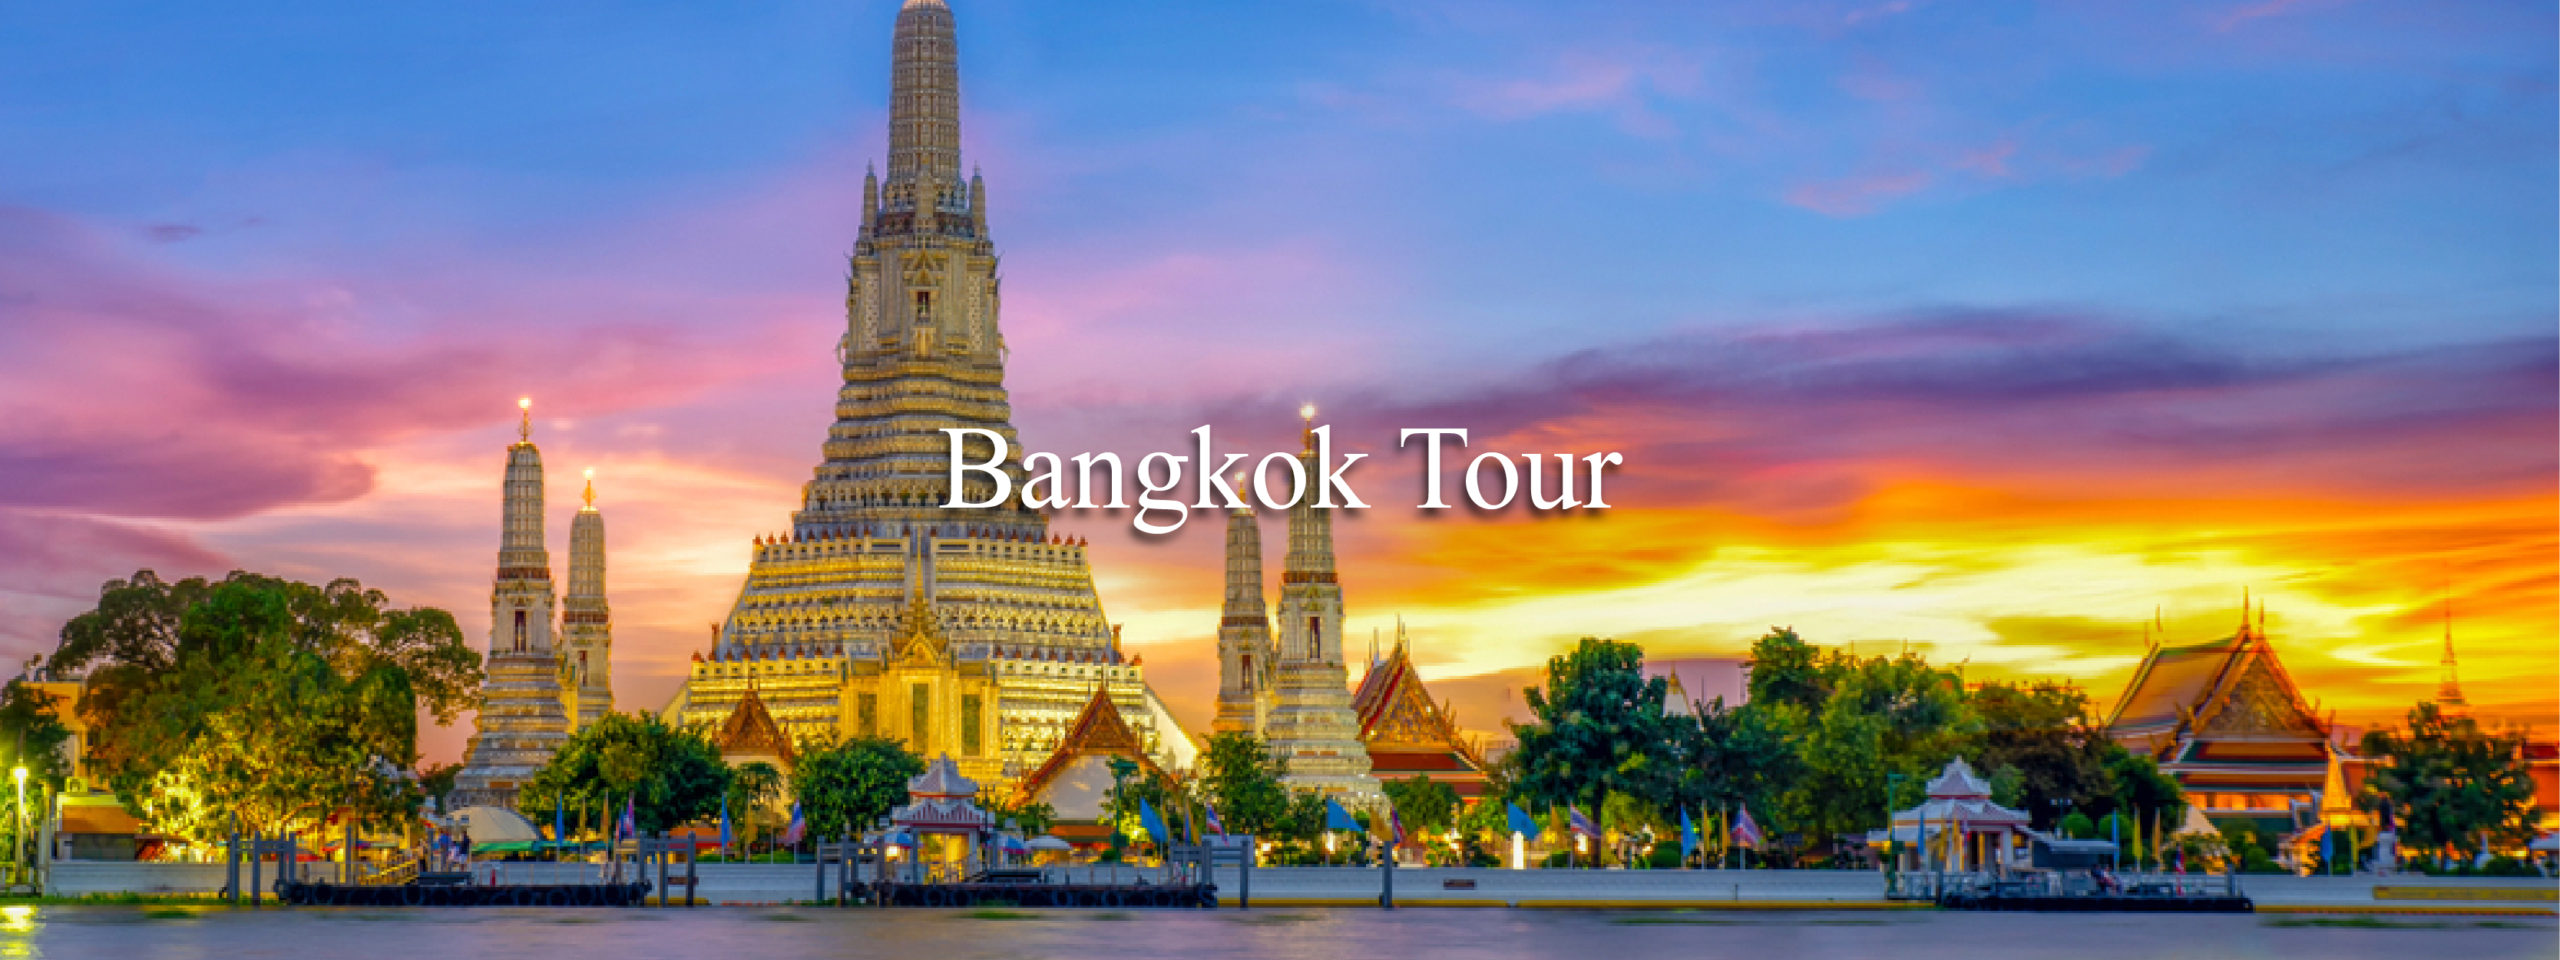 show bangkok tour packages